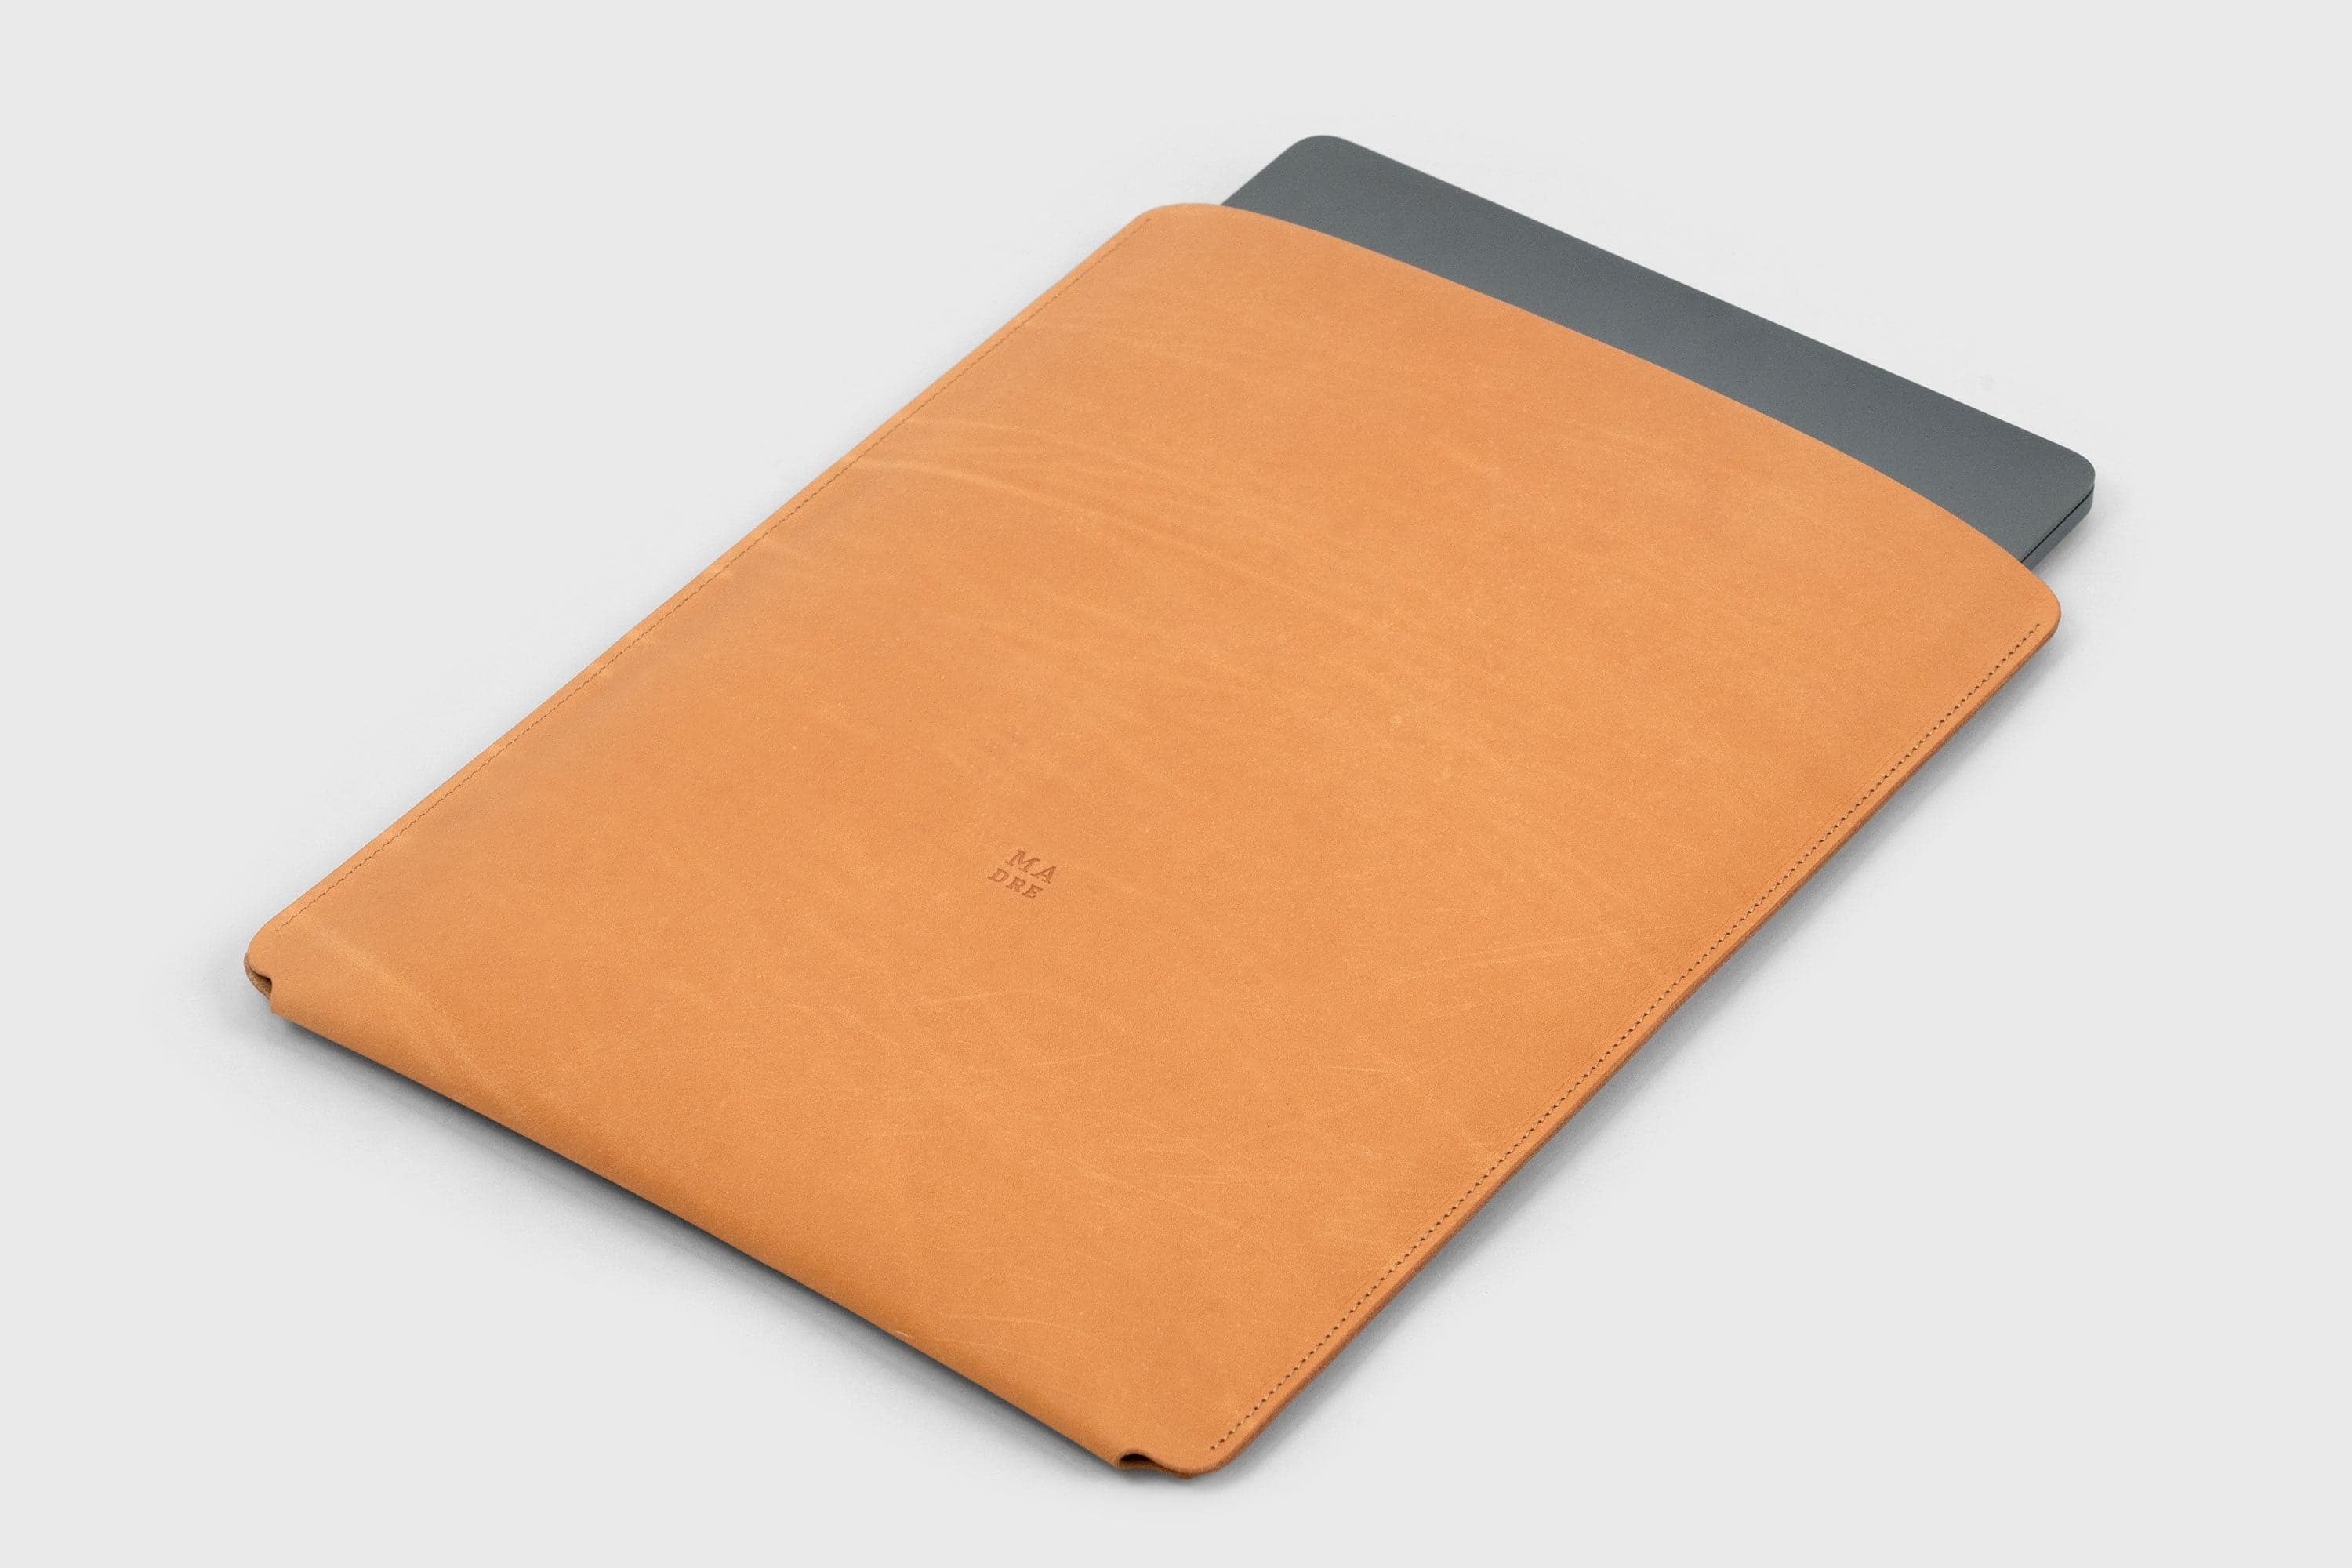 MacBook Pro 16 Inch Leather Slip Sleeve Case Brown Vegetable Tanned Full Grain Real Leather Minimalistic Design Premium Quality Manuel Dreesmann Atelier Madre Barcelona